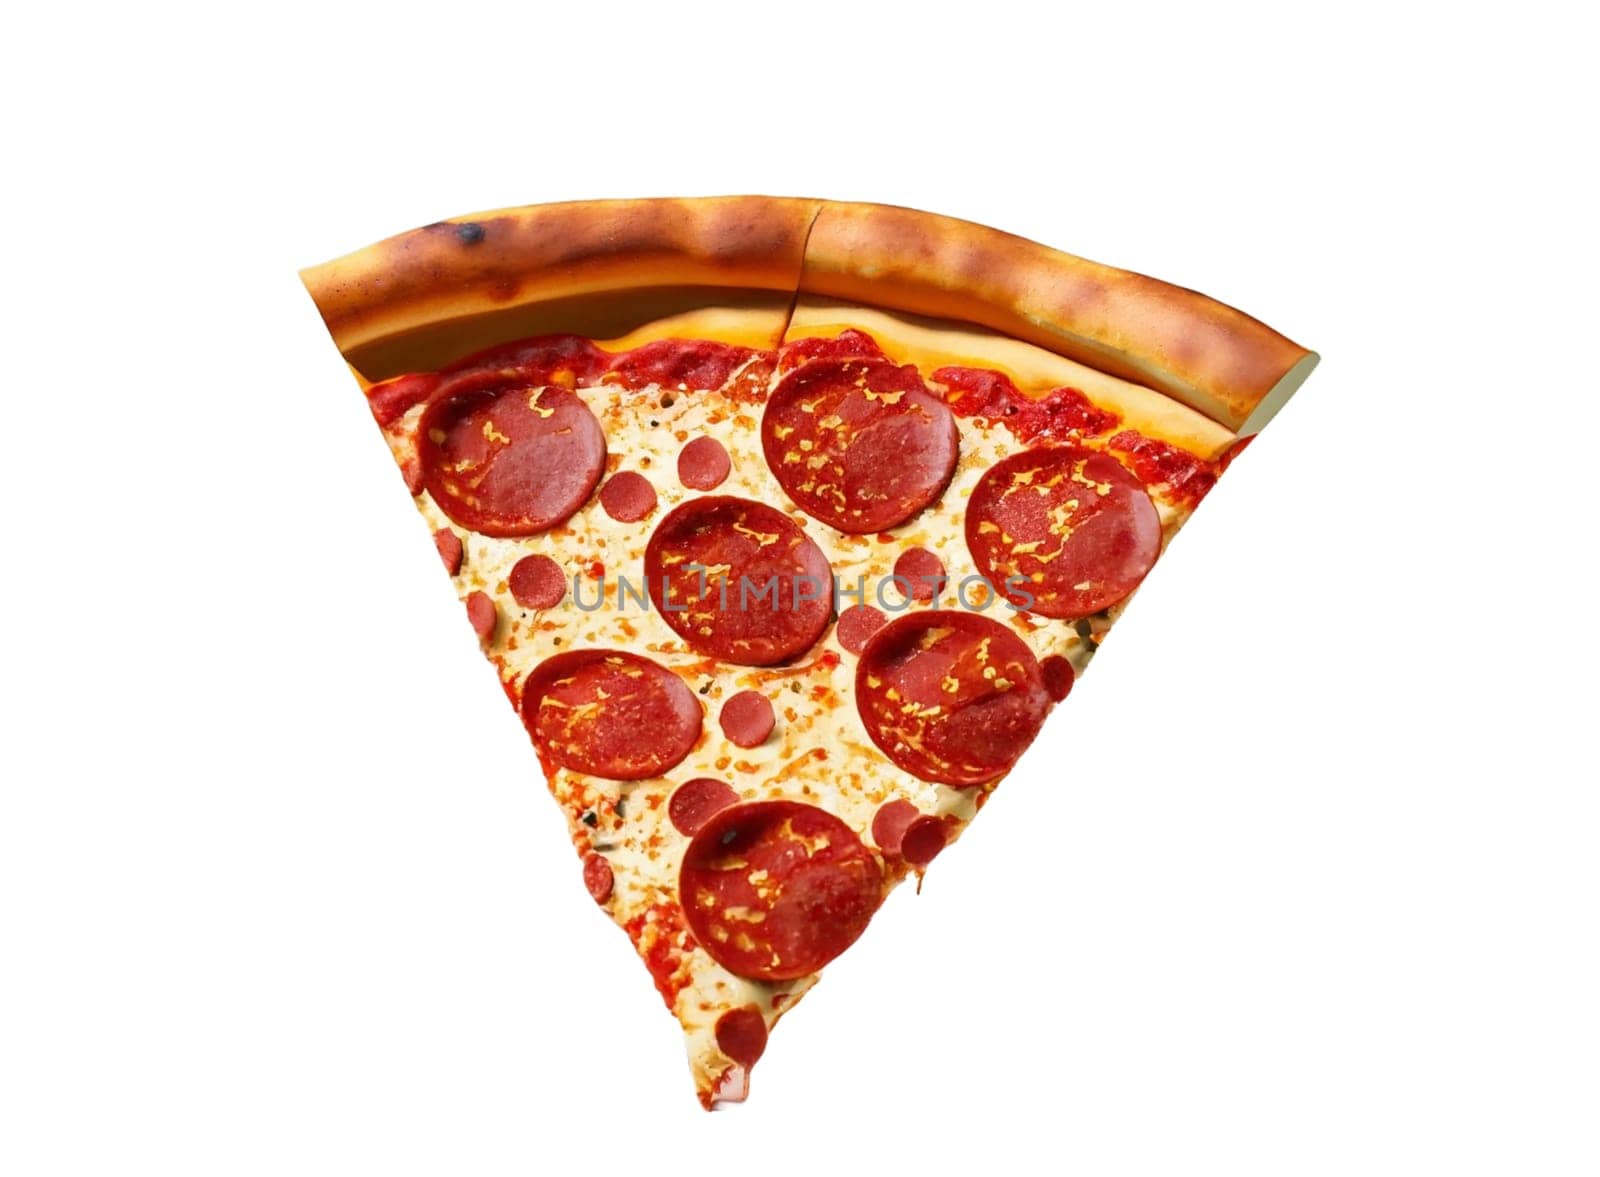 Slice of fresh italian classic original Pepperoni Pizza isolated on white background png image. High quality image